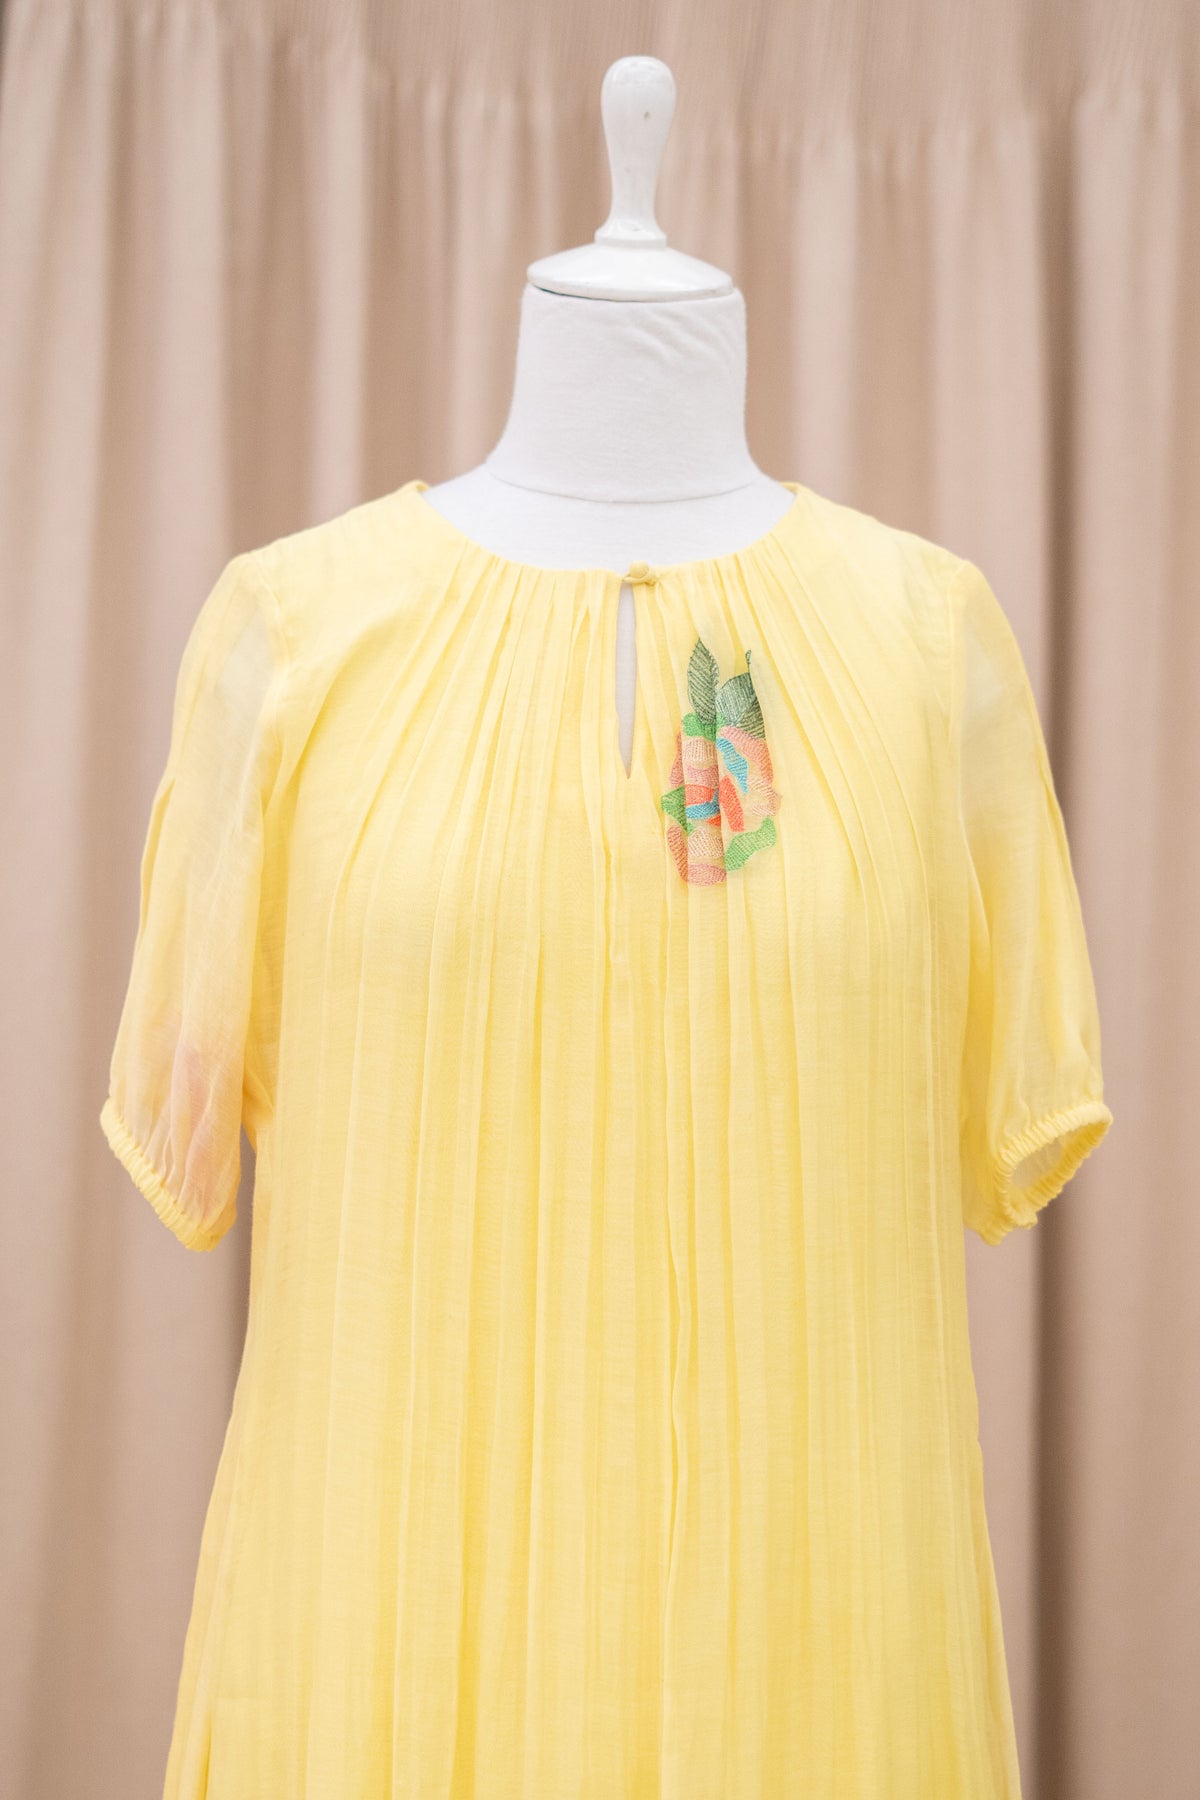 DS - yellow dress